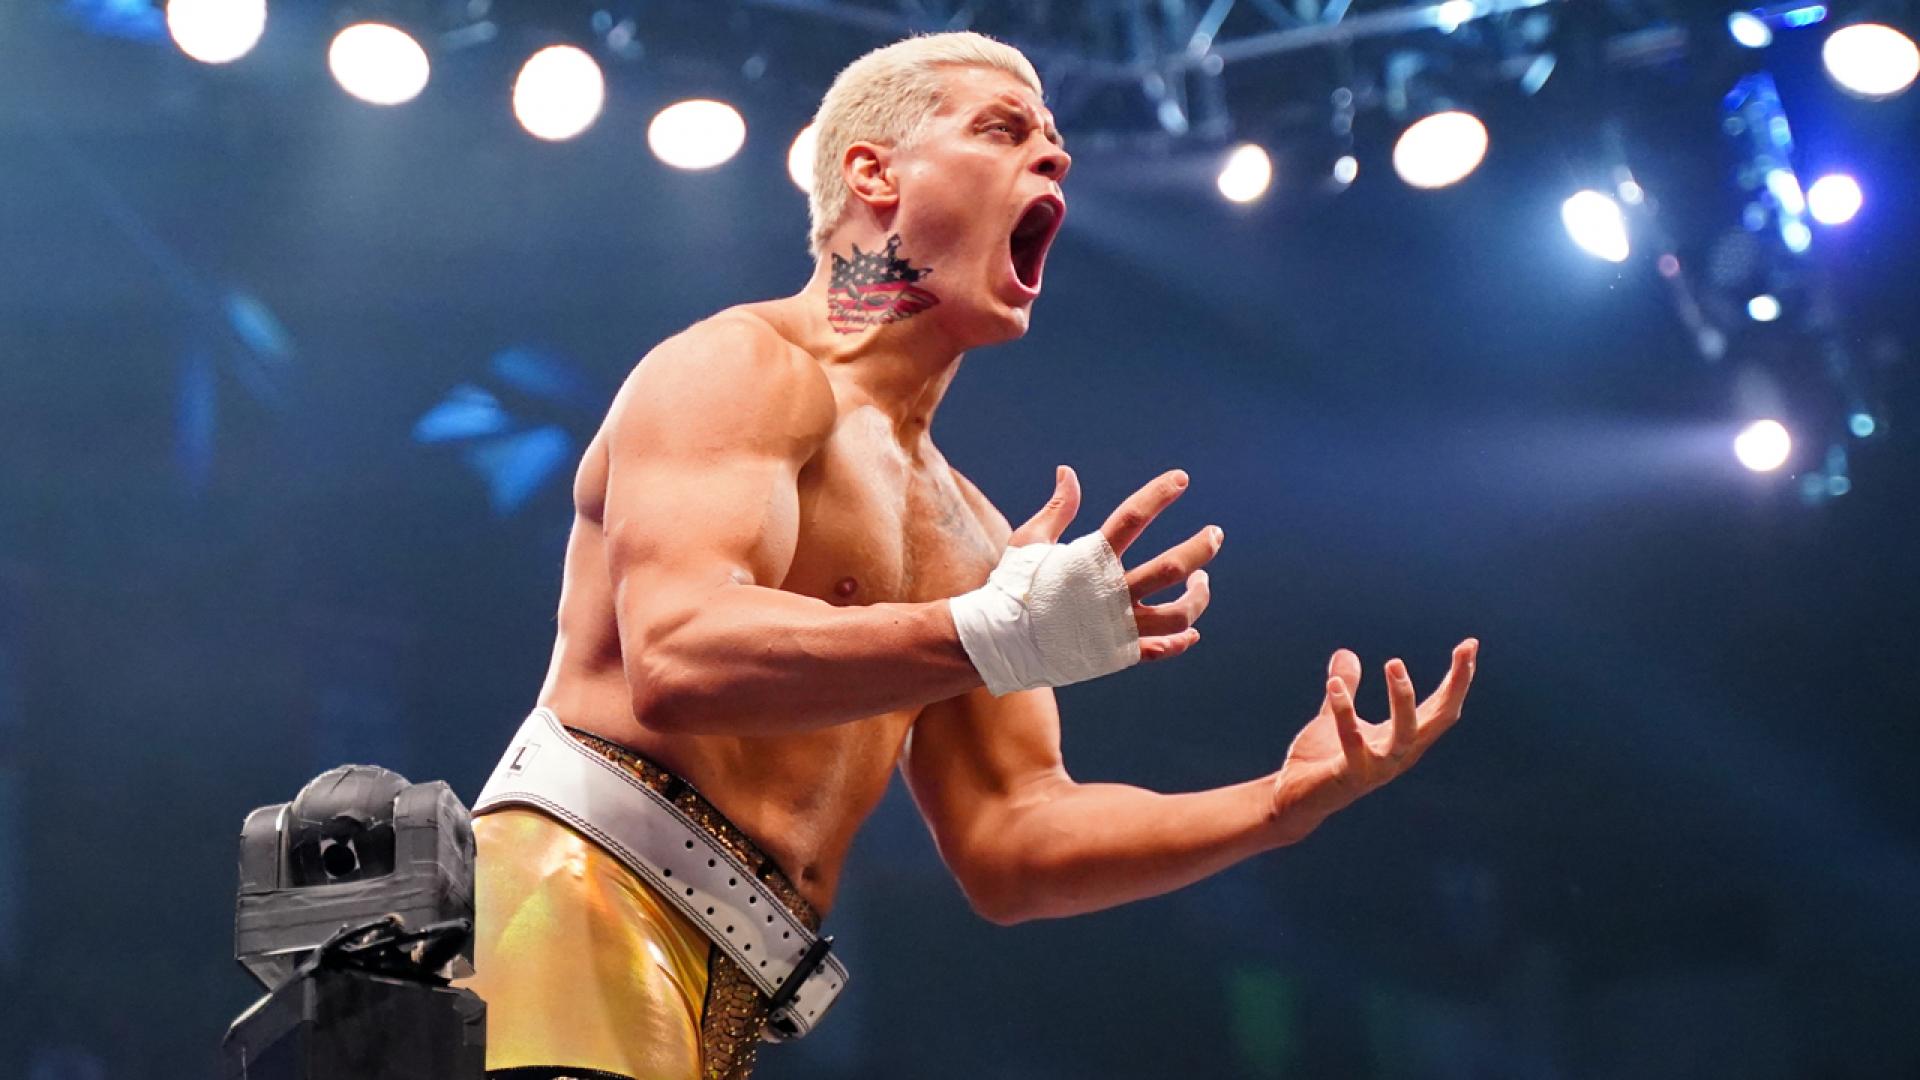 Freddie Prinze Jr. Discusses Being Impacted By Cody Rhodes’ Royal Rumble Win